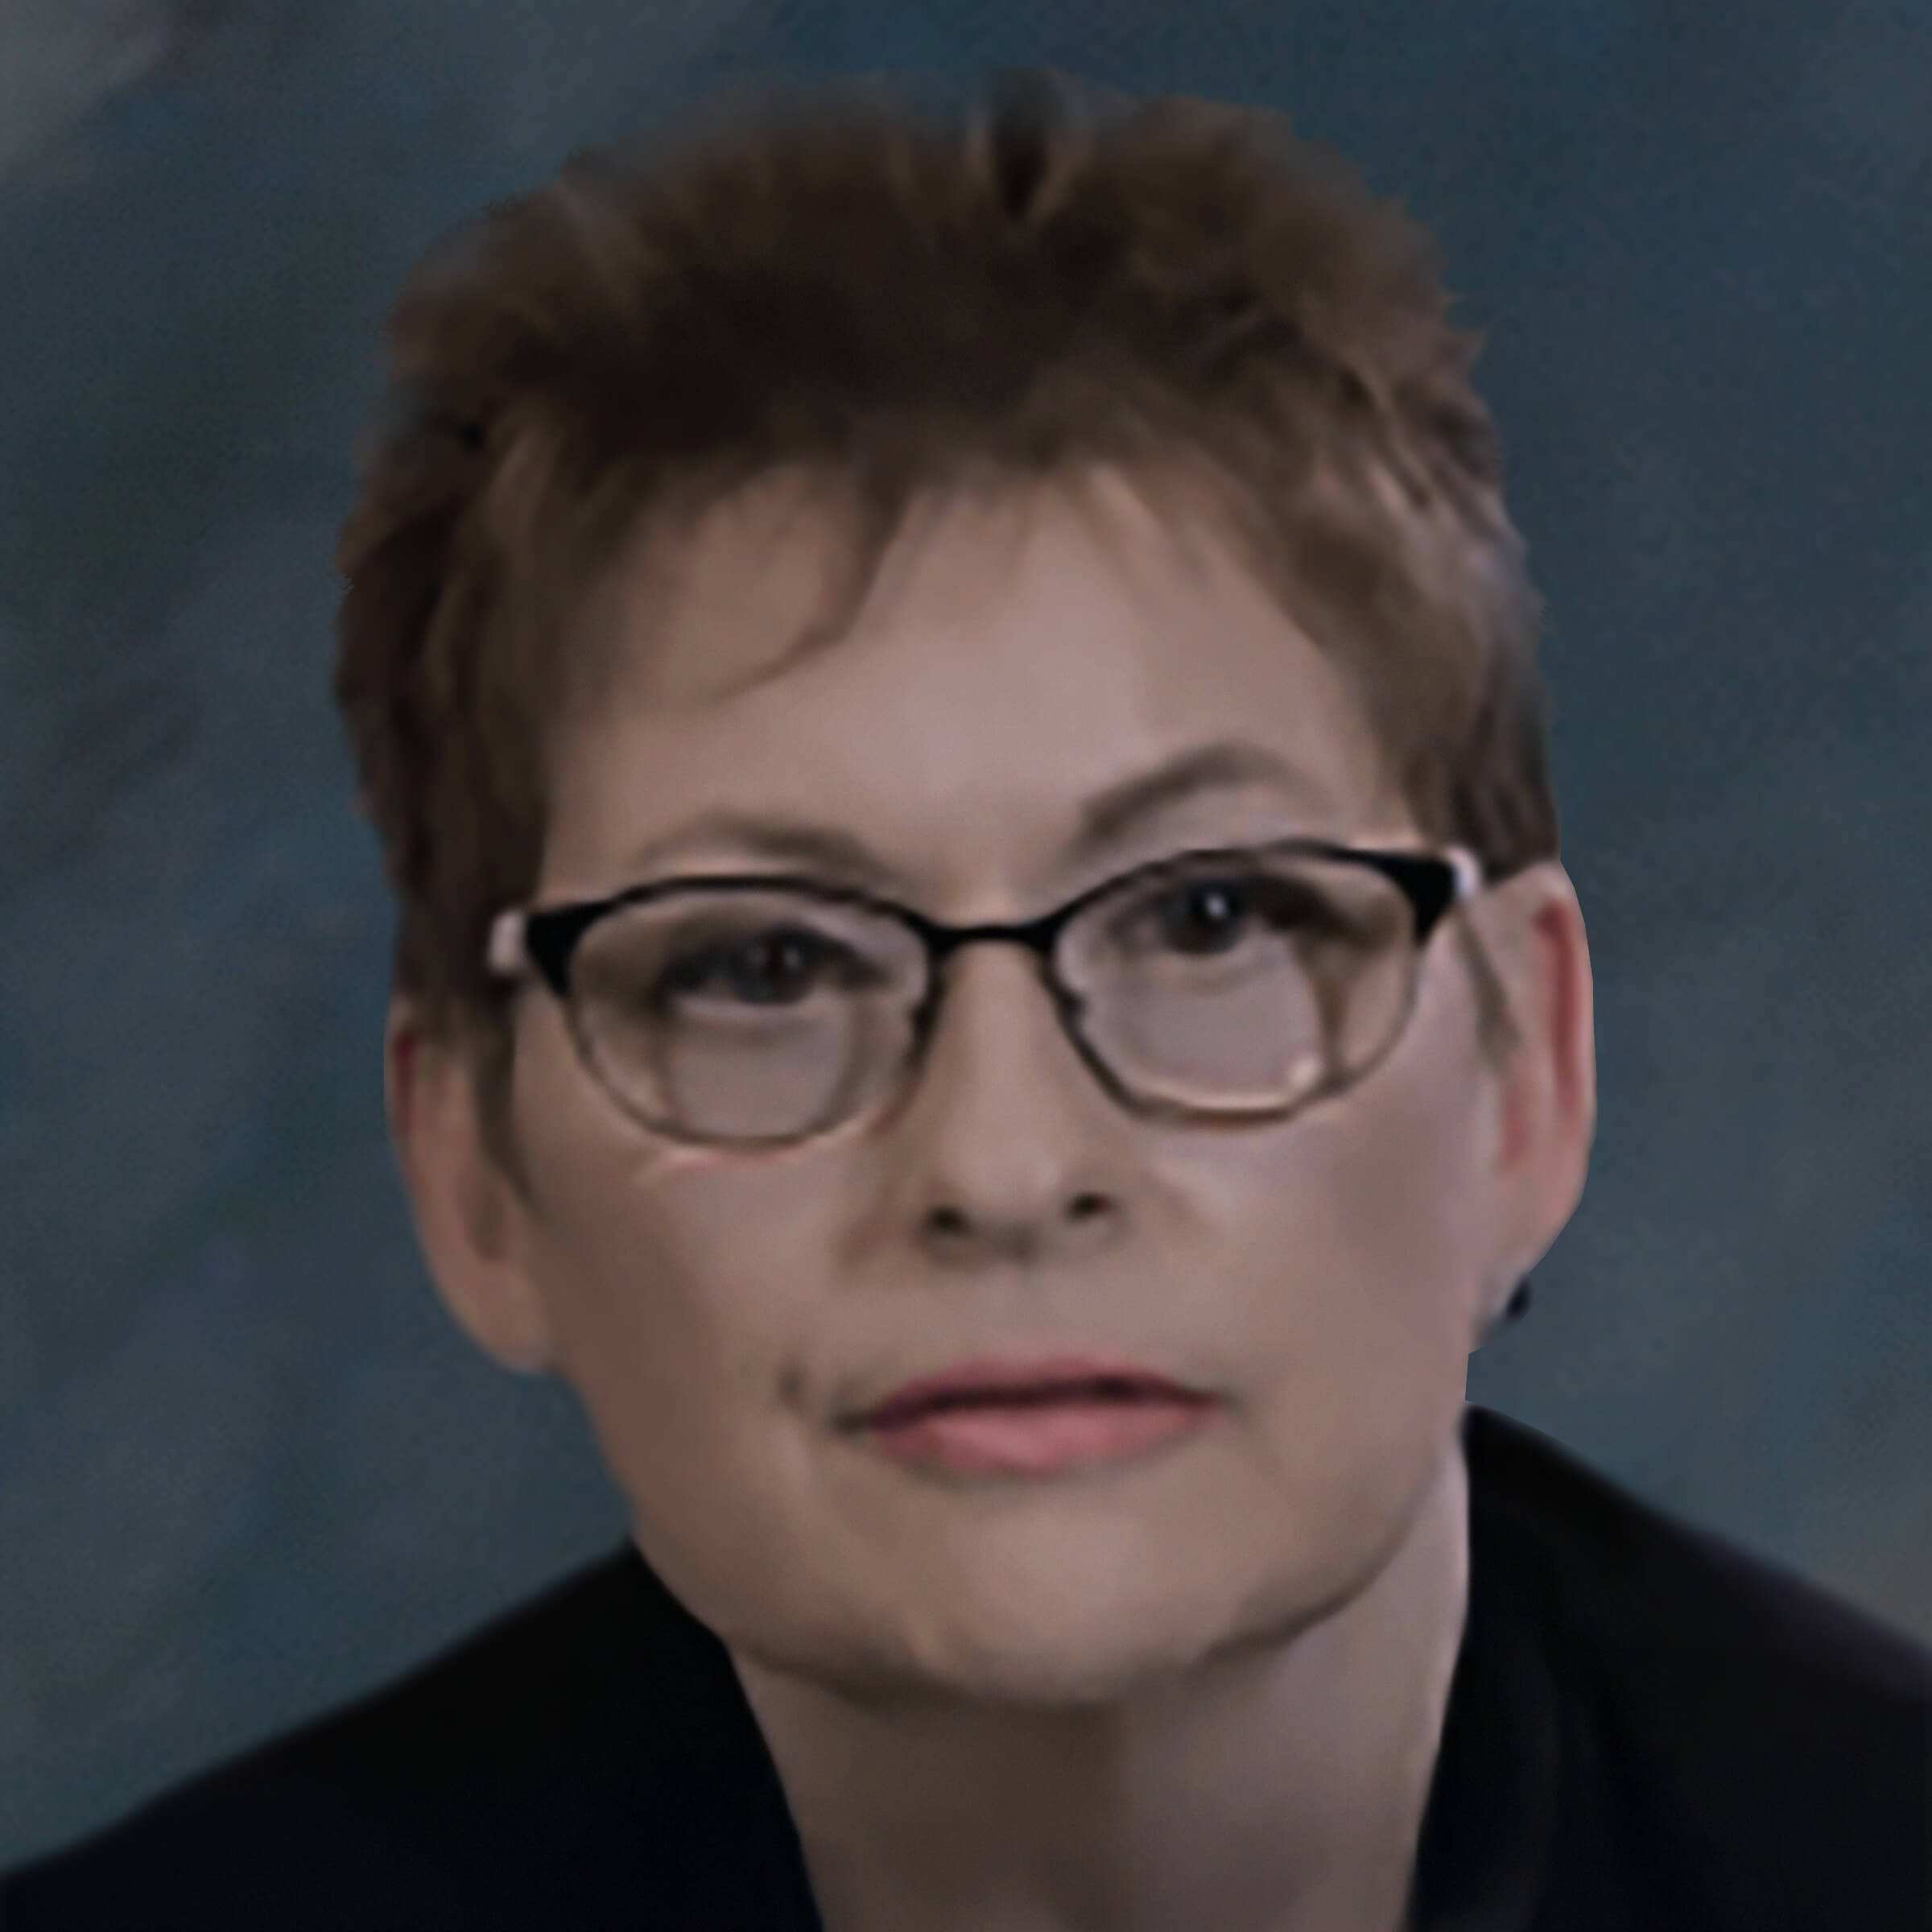 Hon. Barbara Odwak, Master Arbitrator and Hearing Officer, NAM (National Arbitration and Mediation)